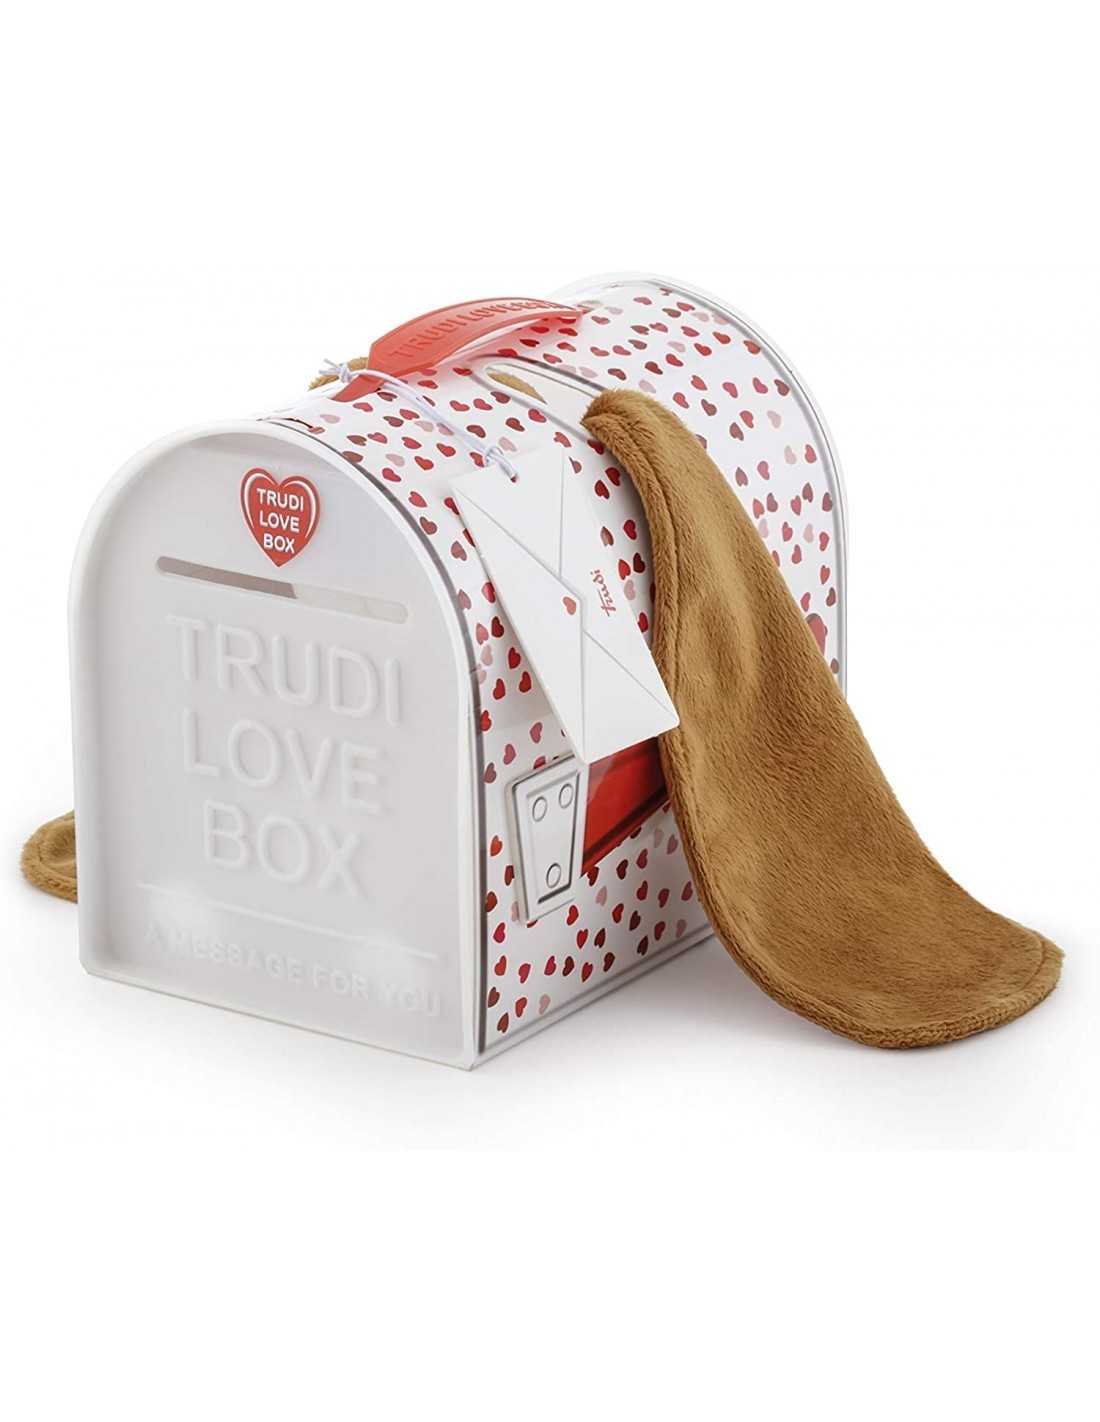 Love Box Trudi "Dachshund"